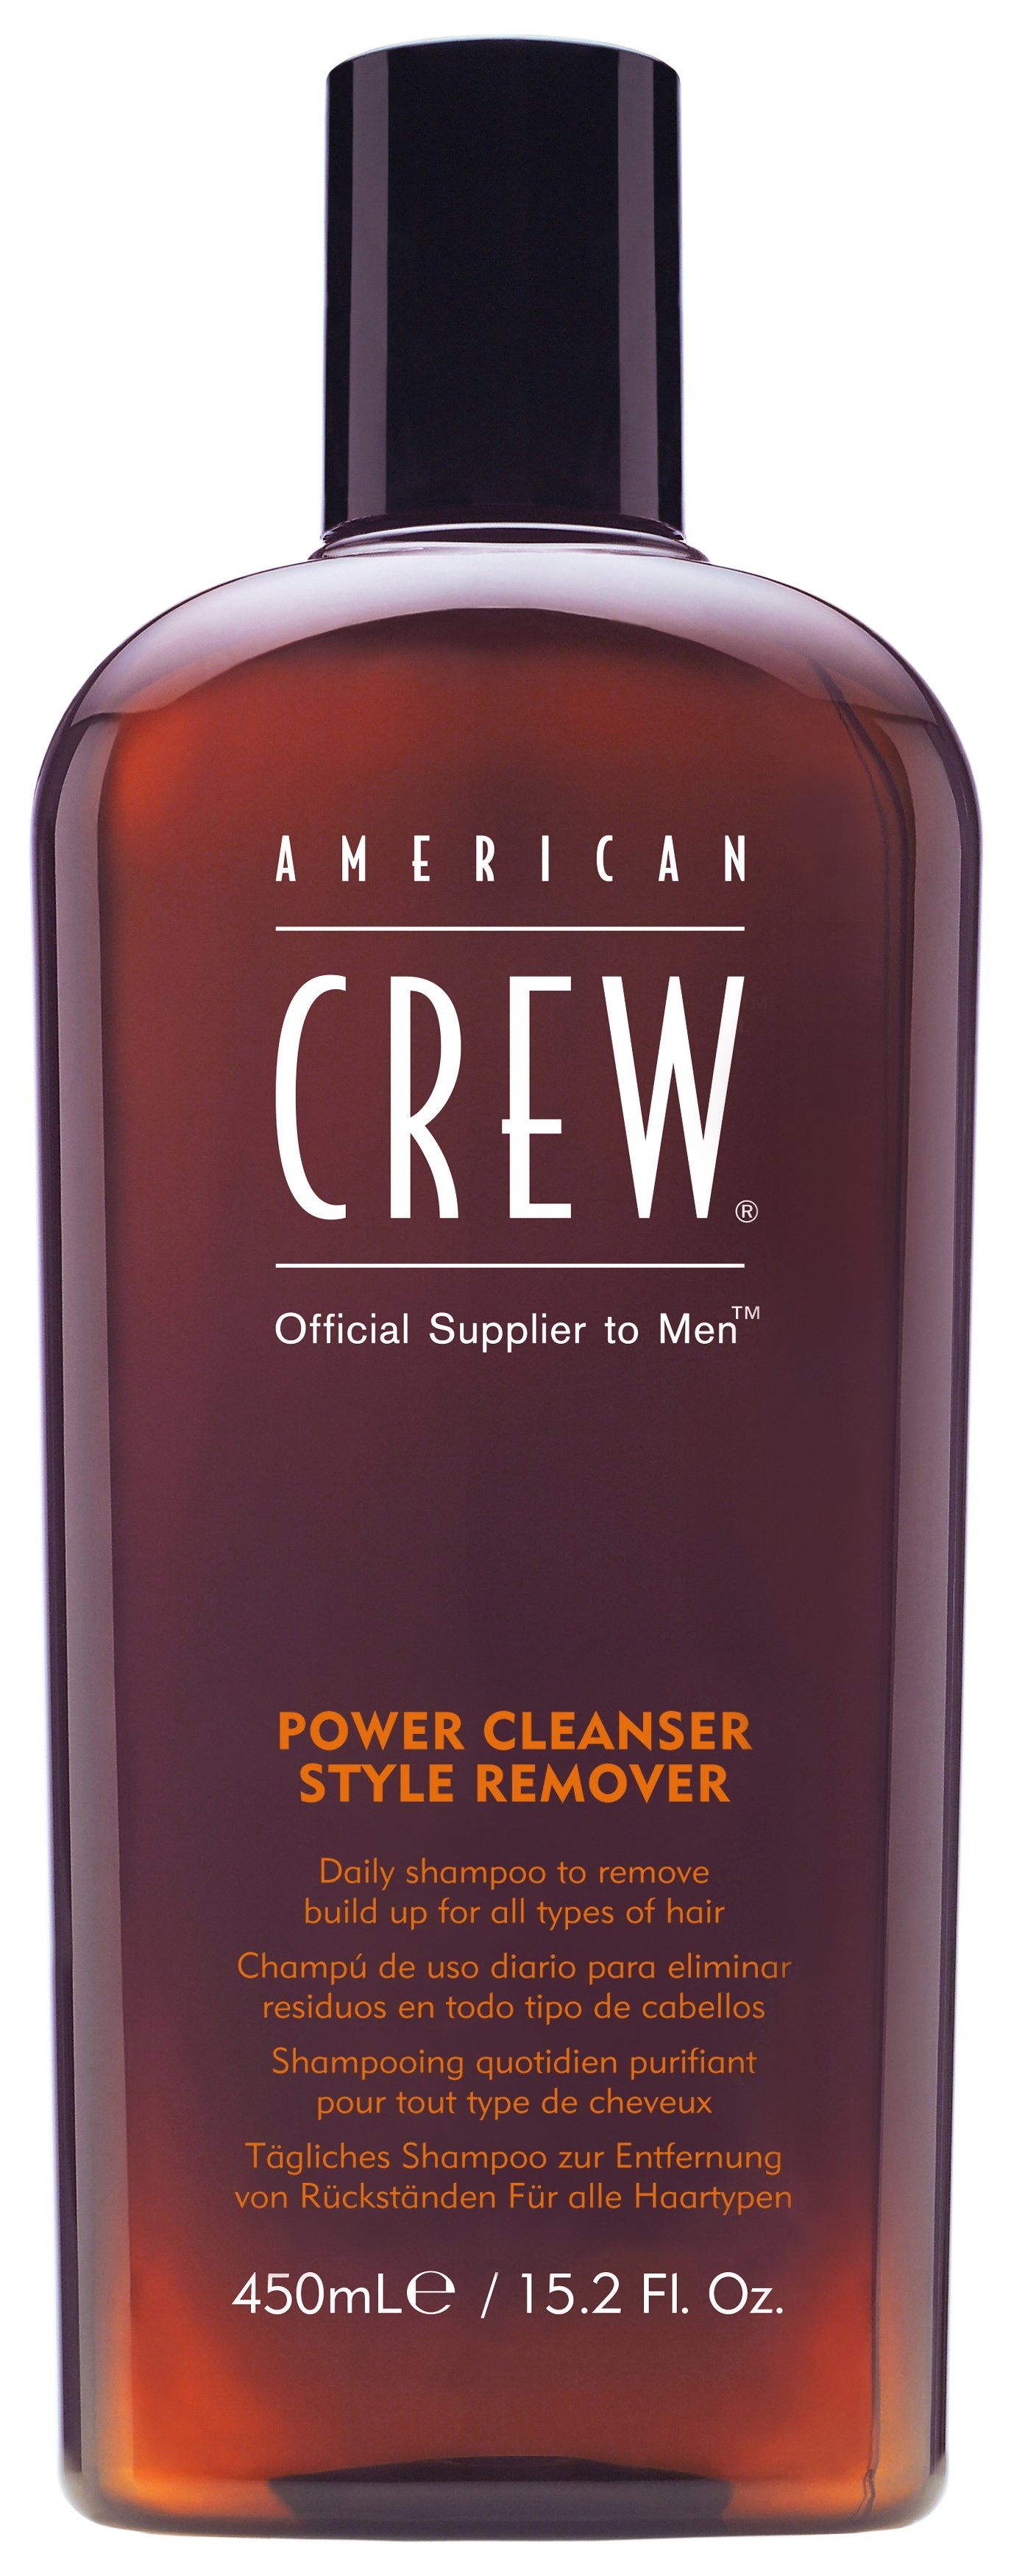 Мужские шампуни:  AMERICAN CREW -  Шампунь очищающий для ежедневного ухода American Crew Power Cleanser Style Remover (450 мл) (450 мл)